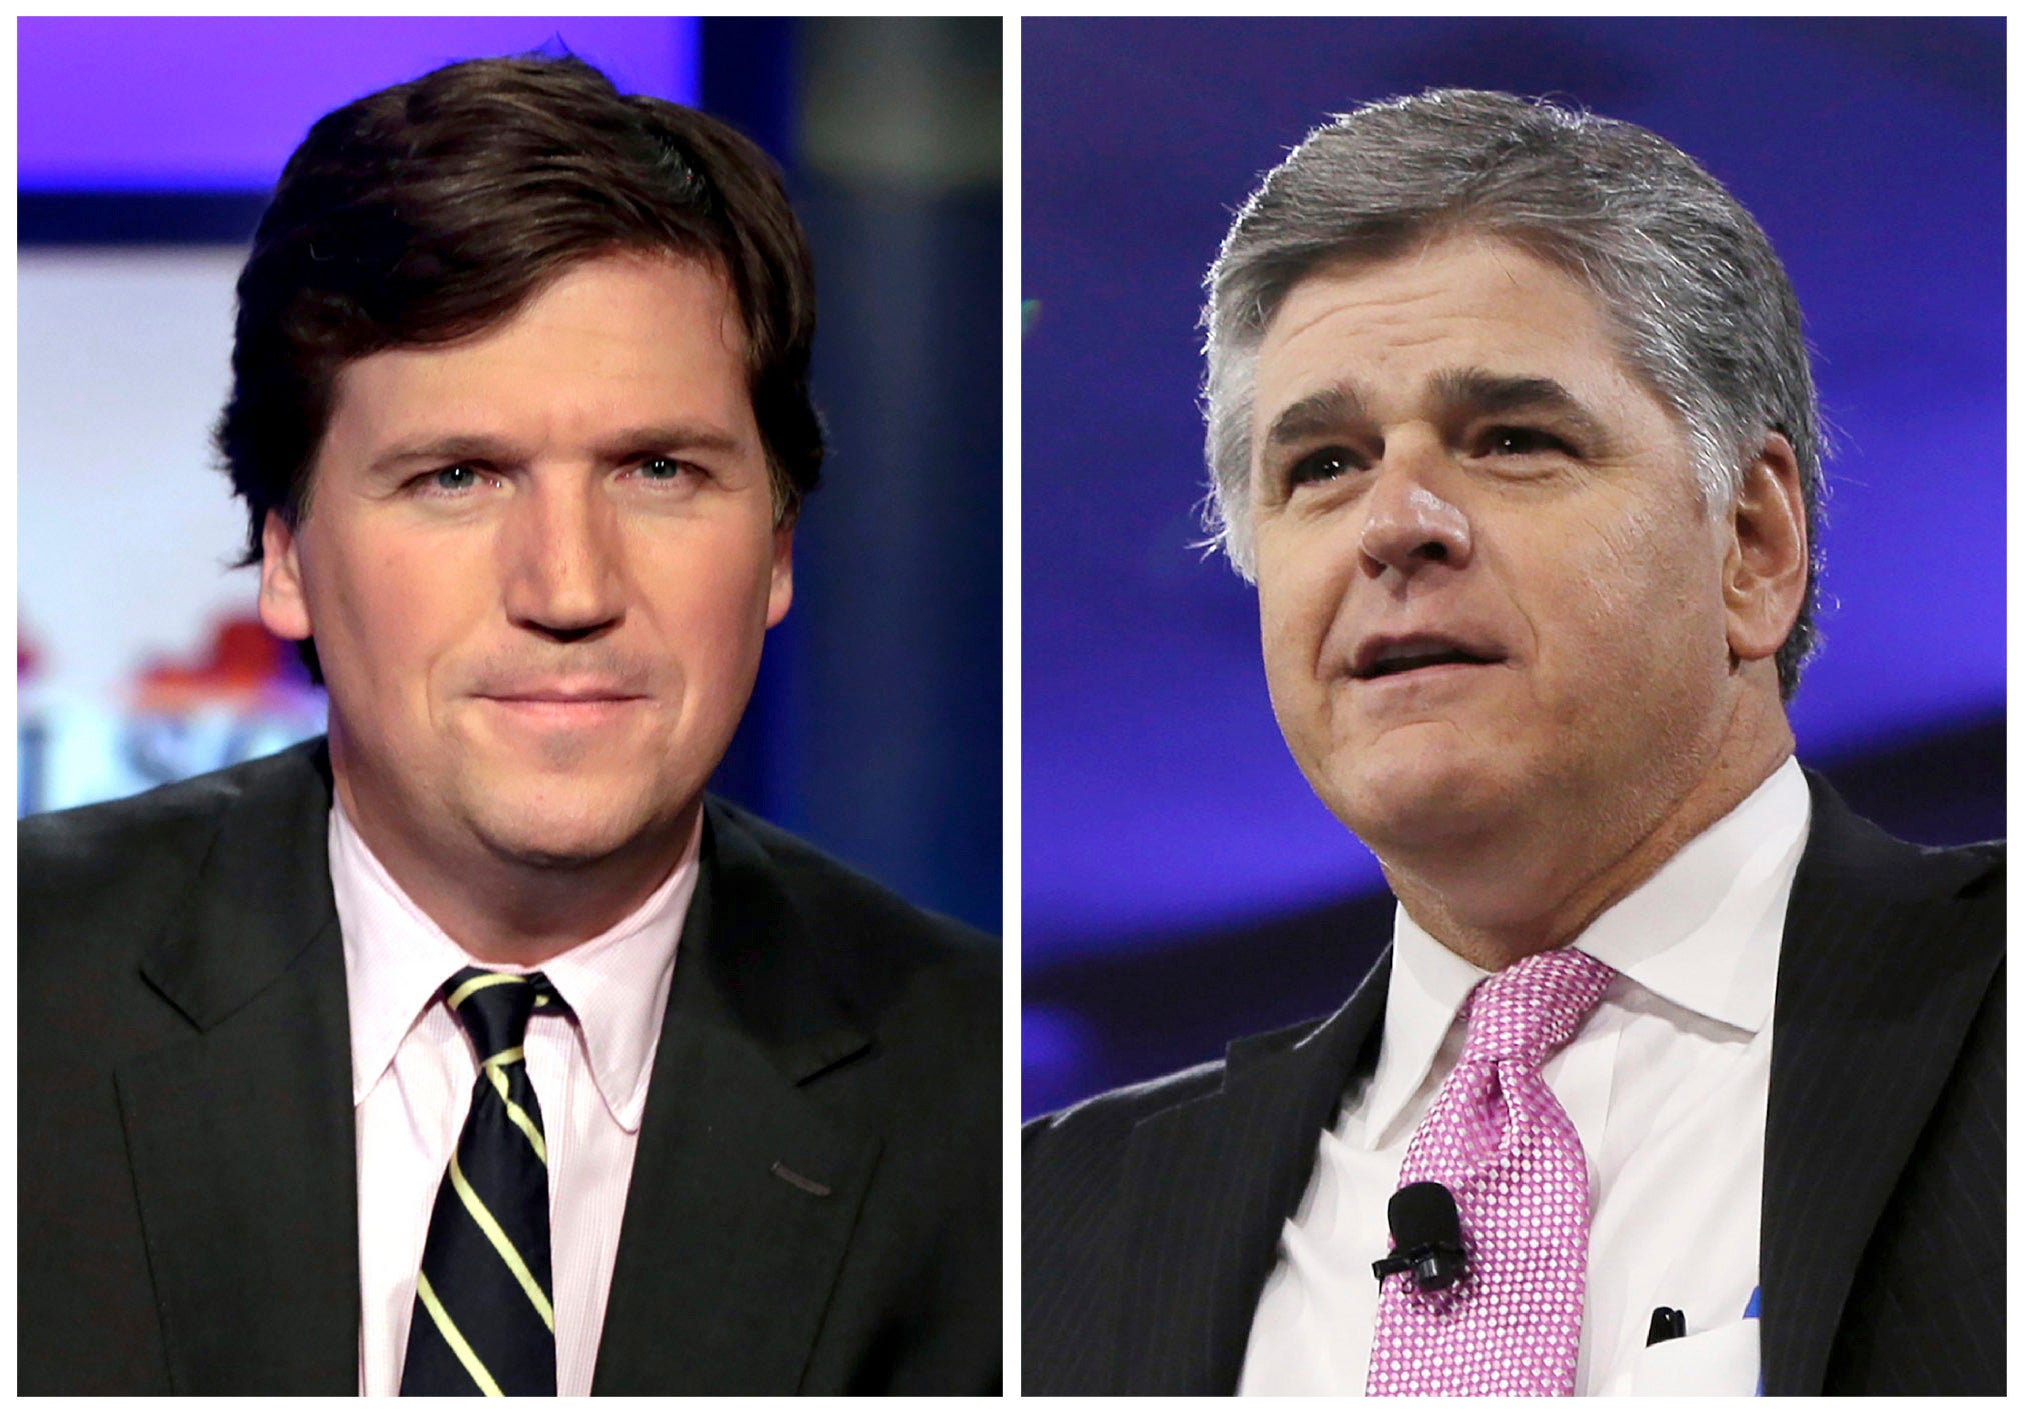 Fox News hosts Tucker Carlson and Sean Hannity